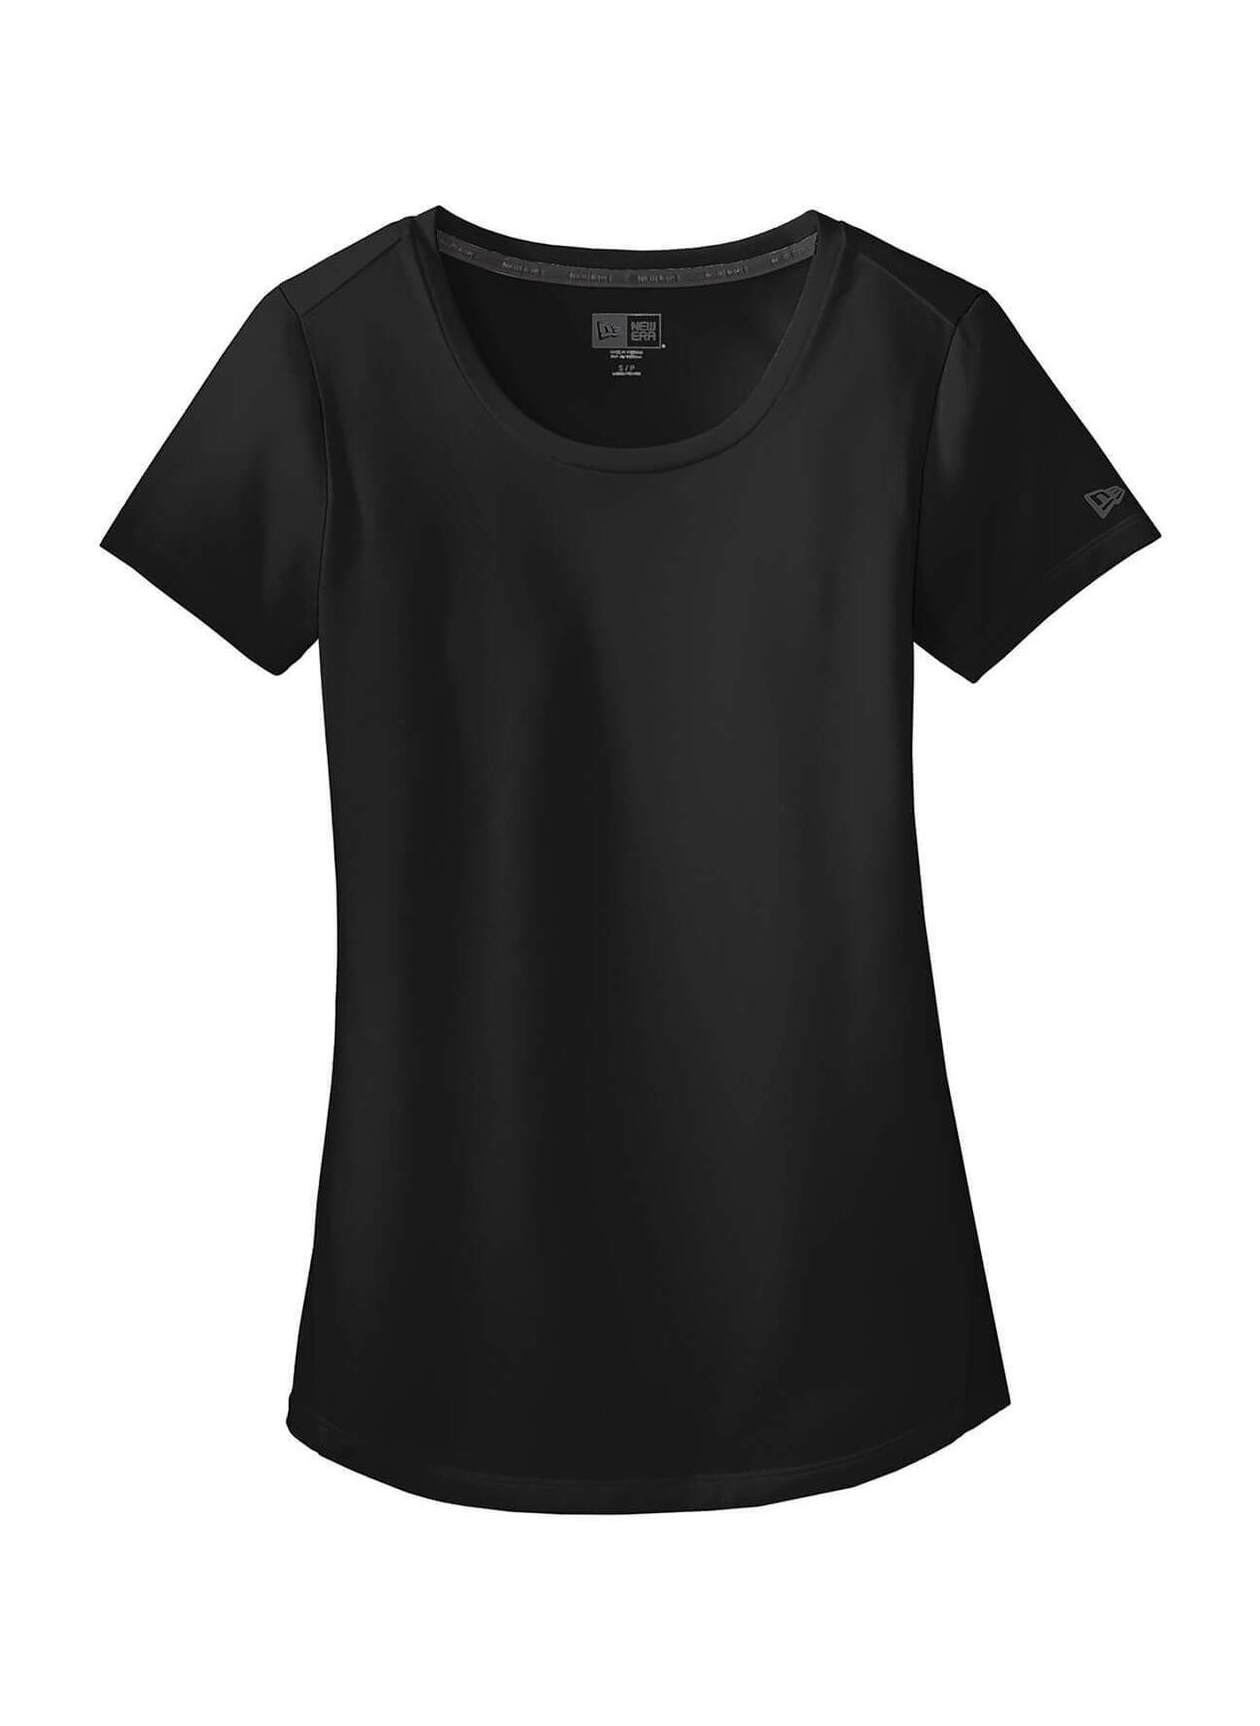 New Era Women's Black Series Performance Scoop T-Shirt